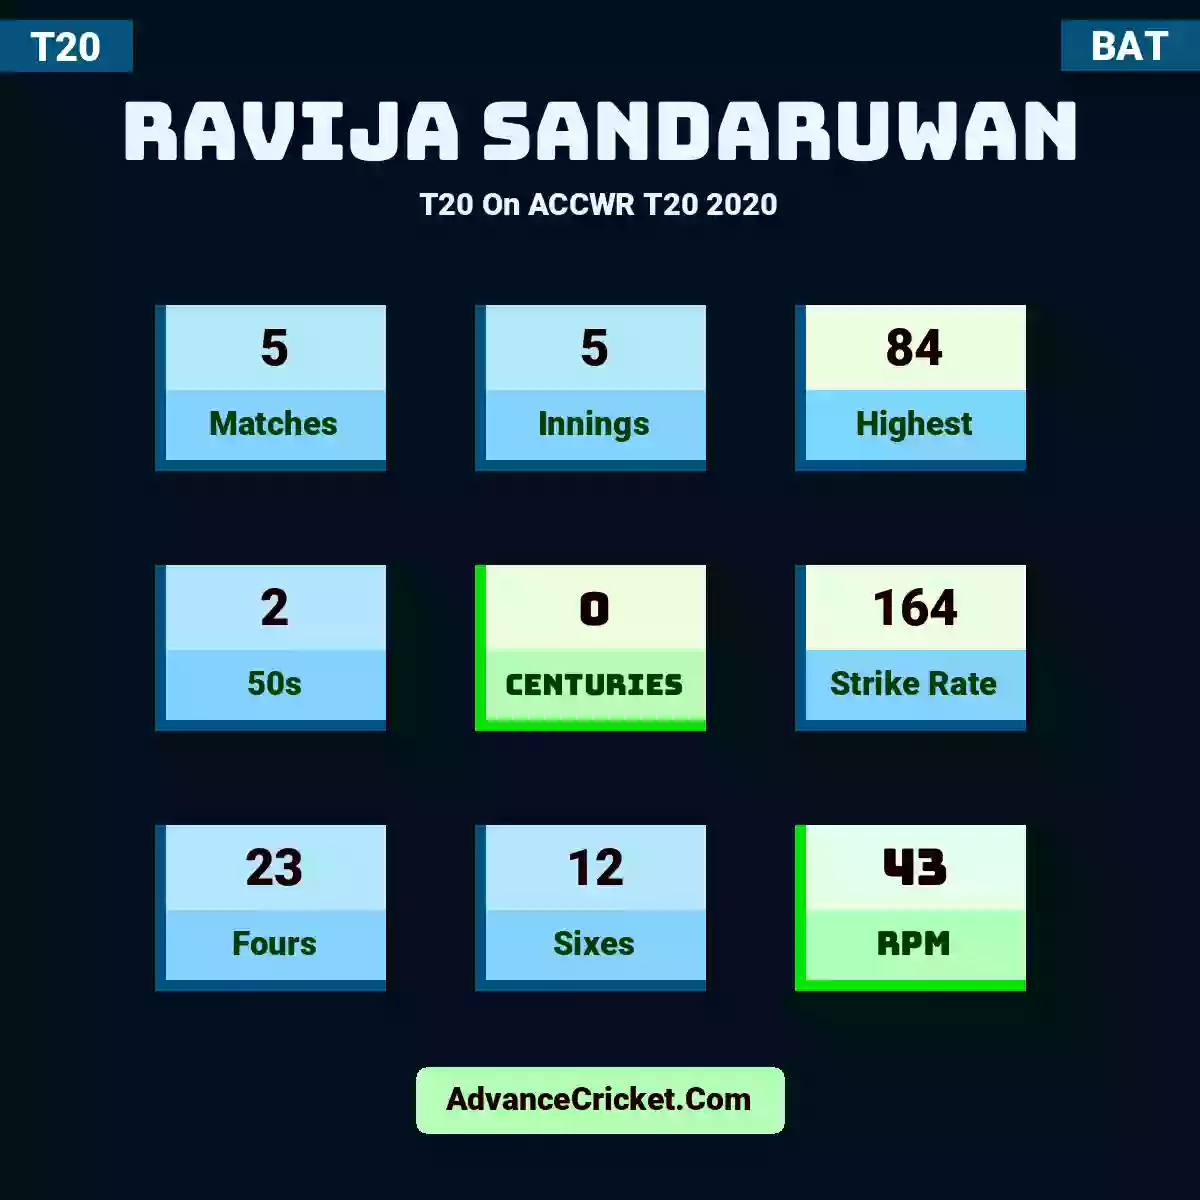 Ravija Sandaruwan T20  On ACCWR T20 2020, Ravija Sandaruwan played 5 matches, scored 84 runs as highest, 2 half-centuries, and 0 centuries, with a strike rate of 164. R.Sandaruwan hit 23 fours and 12 sixes, with an RPM of 43.